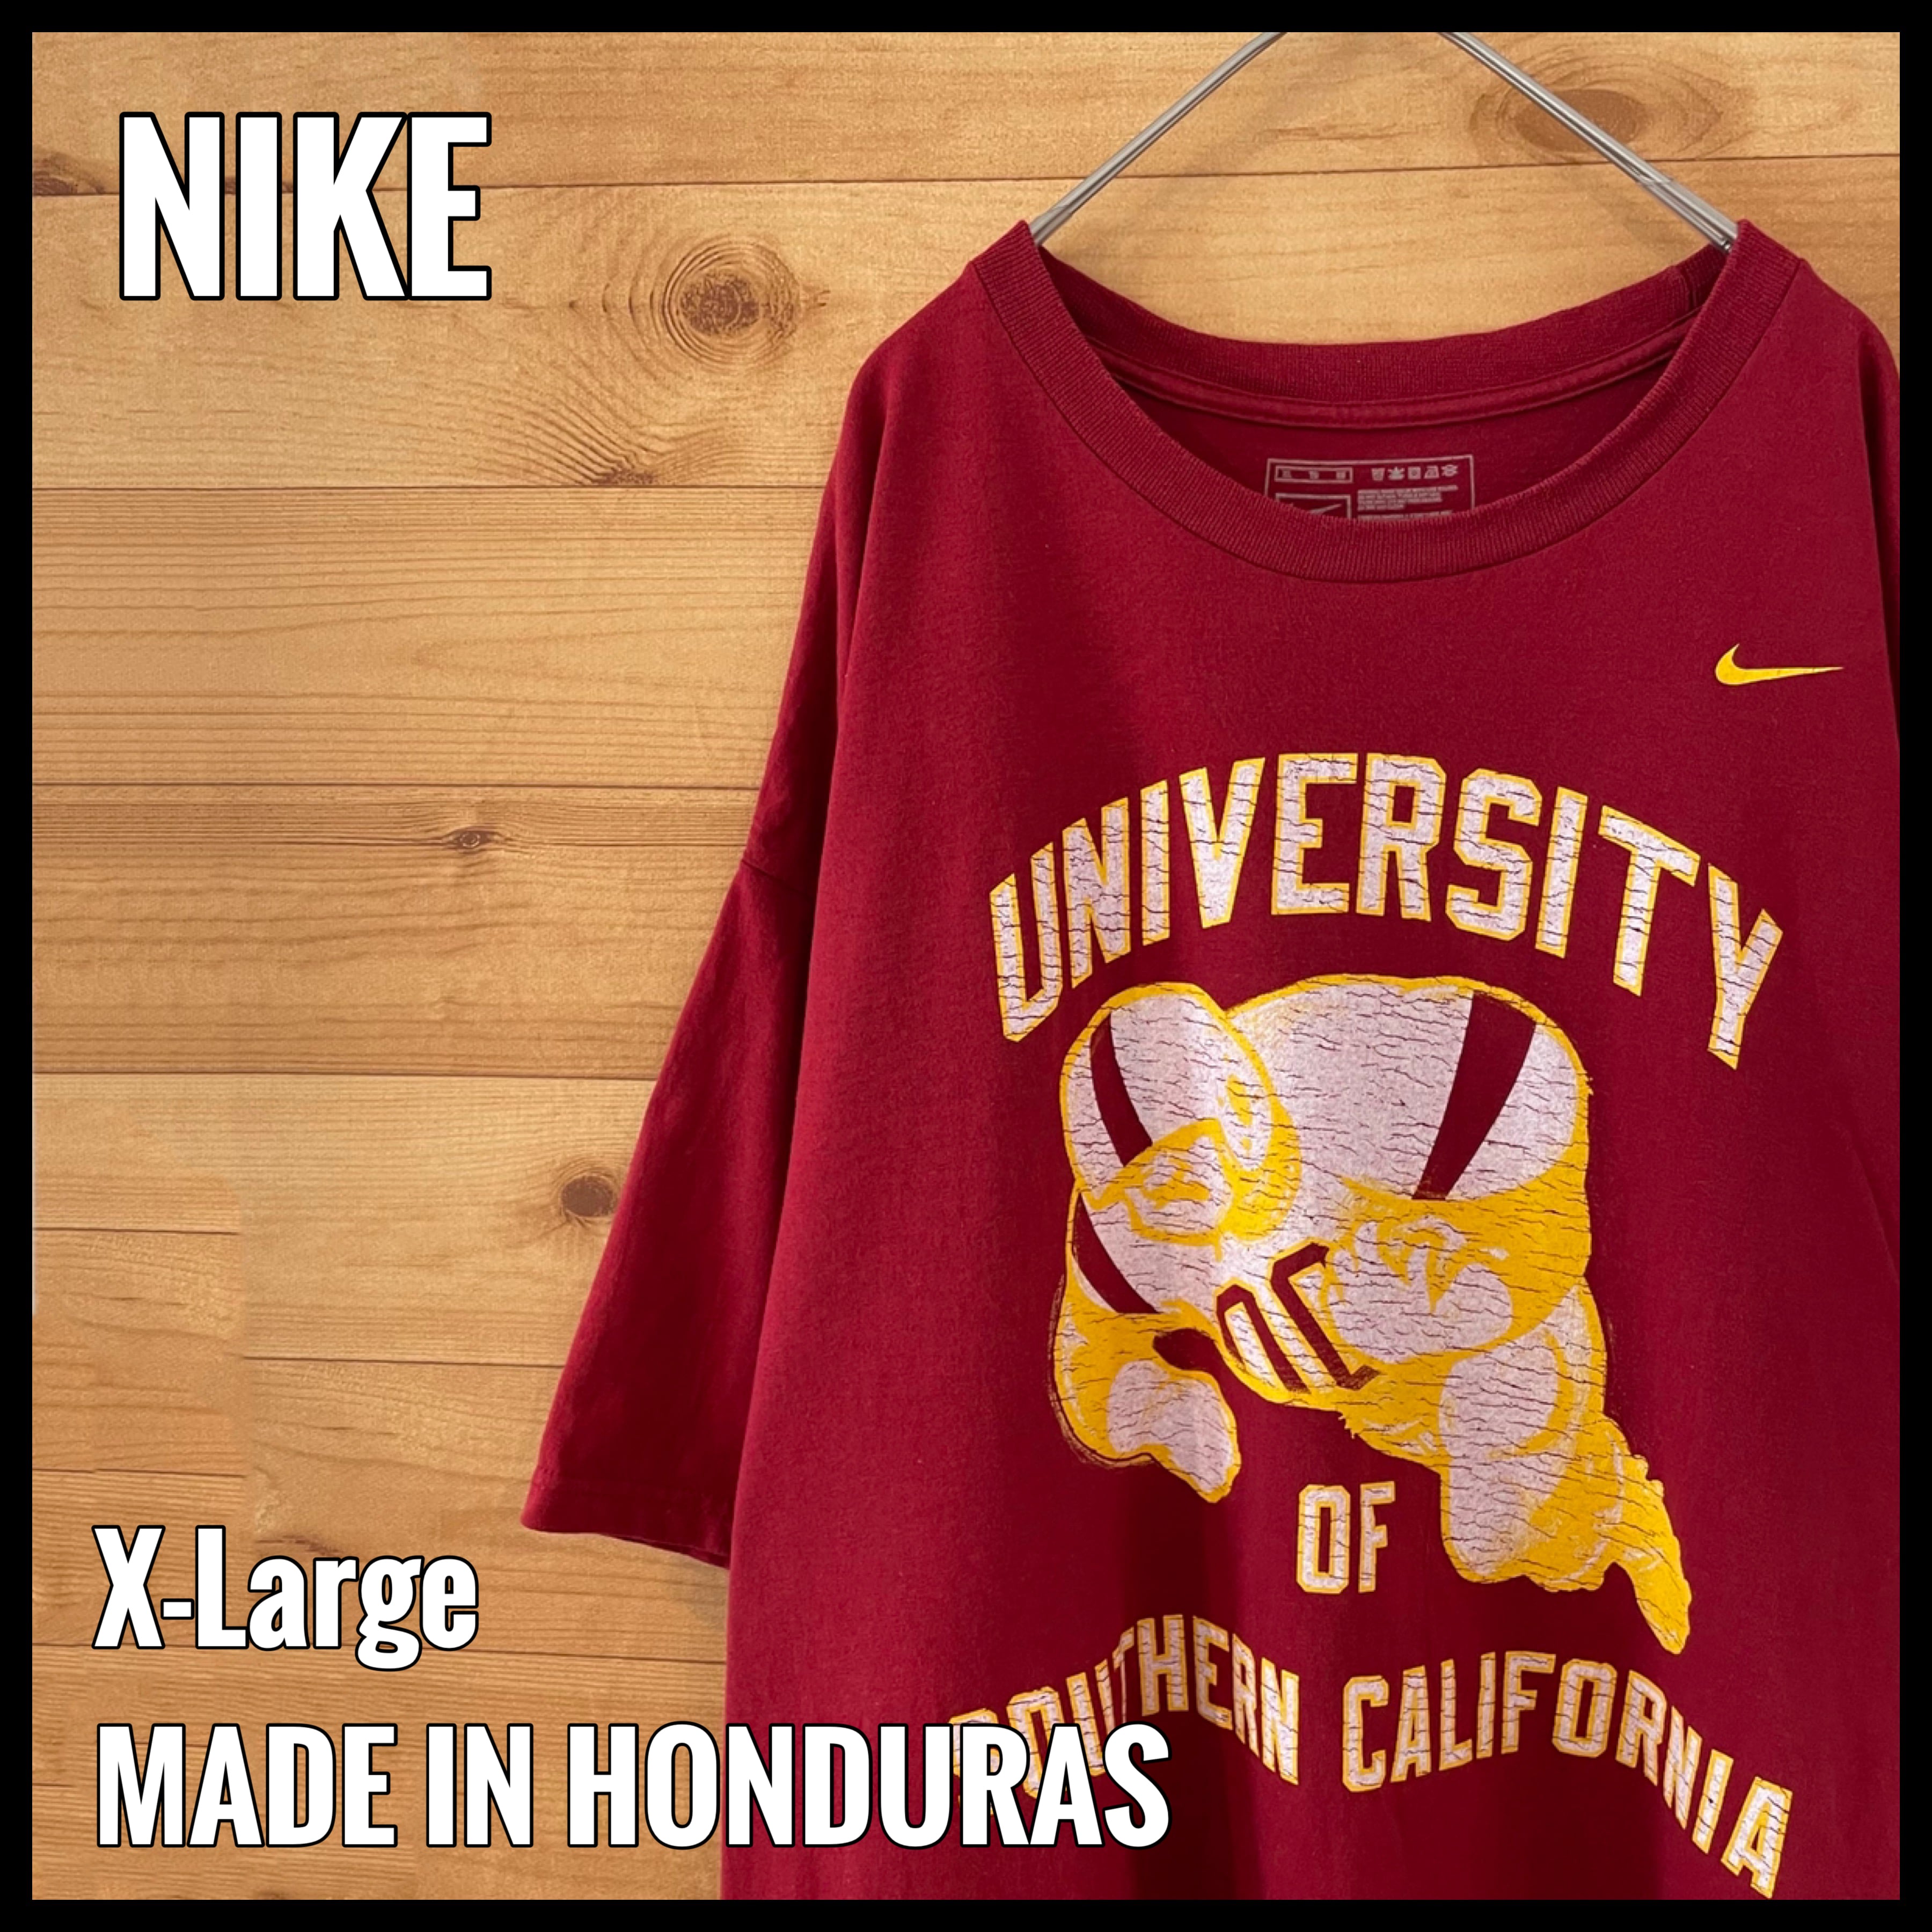 NIKE】カレッジ 南カリフォルニア大学 Tシャツ アメフトアーチロゴ